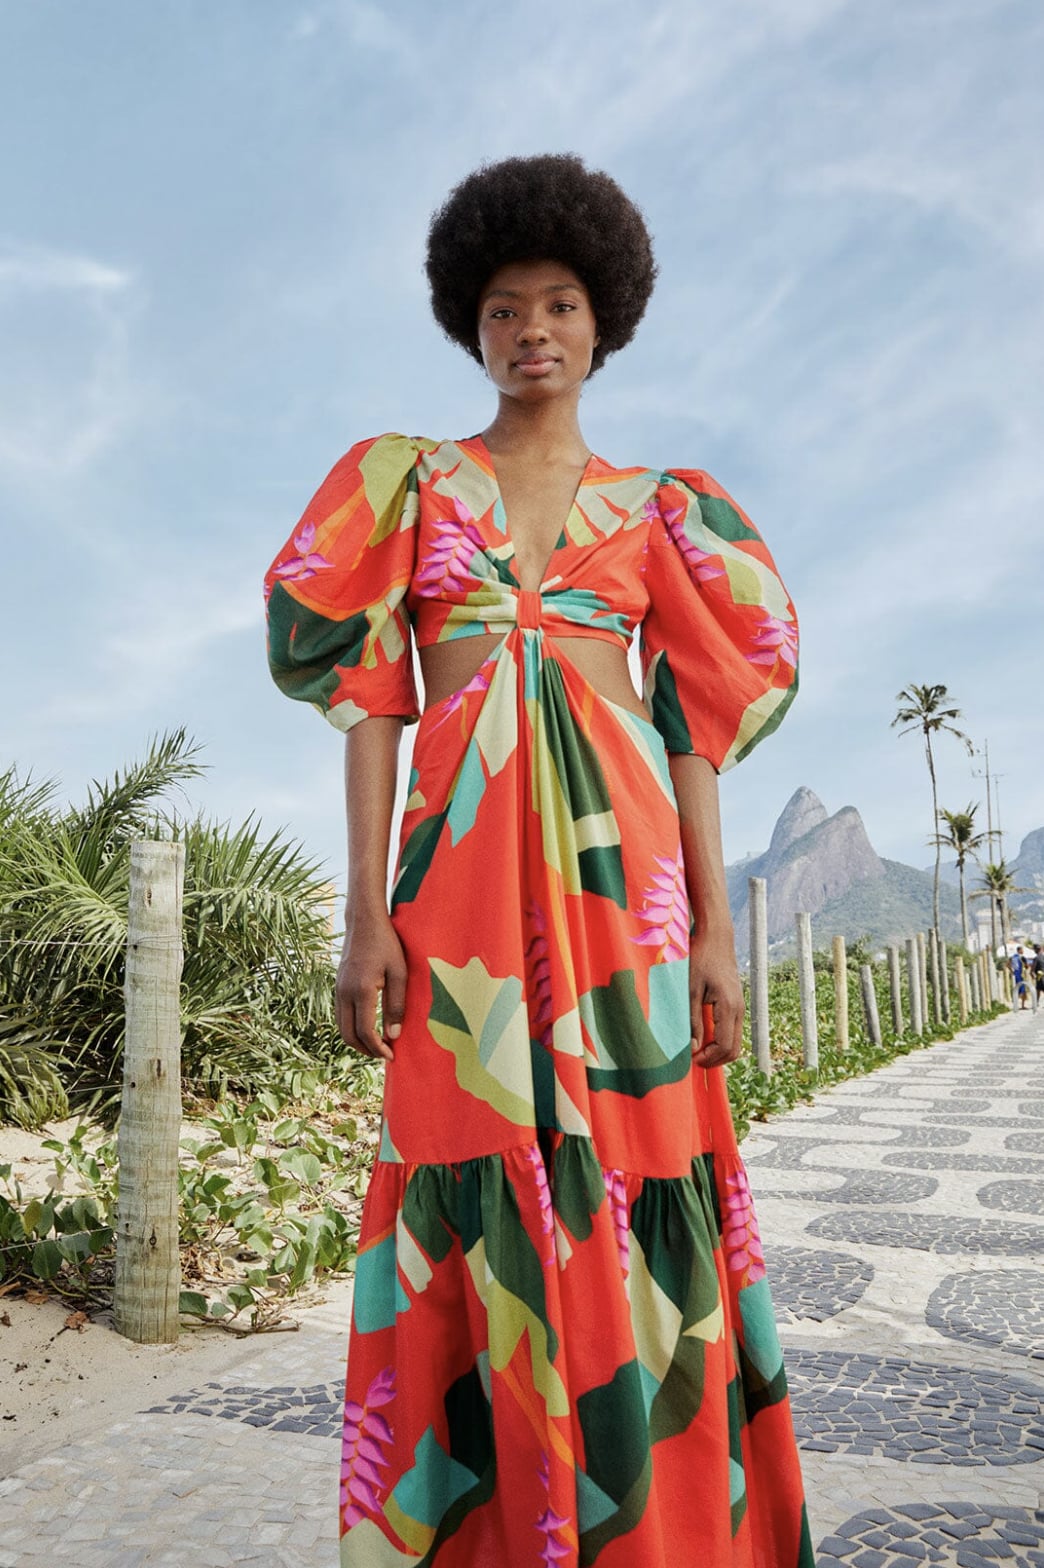 PRETTYGARDEN Women's Floral Maxi Dress 2024 Knot One Shoulder Sleeveless  Ruffle Hem Flowy Boho Dresses